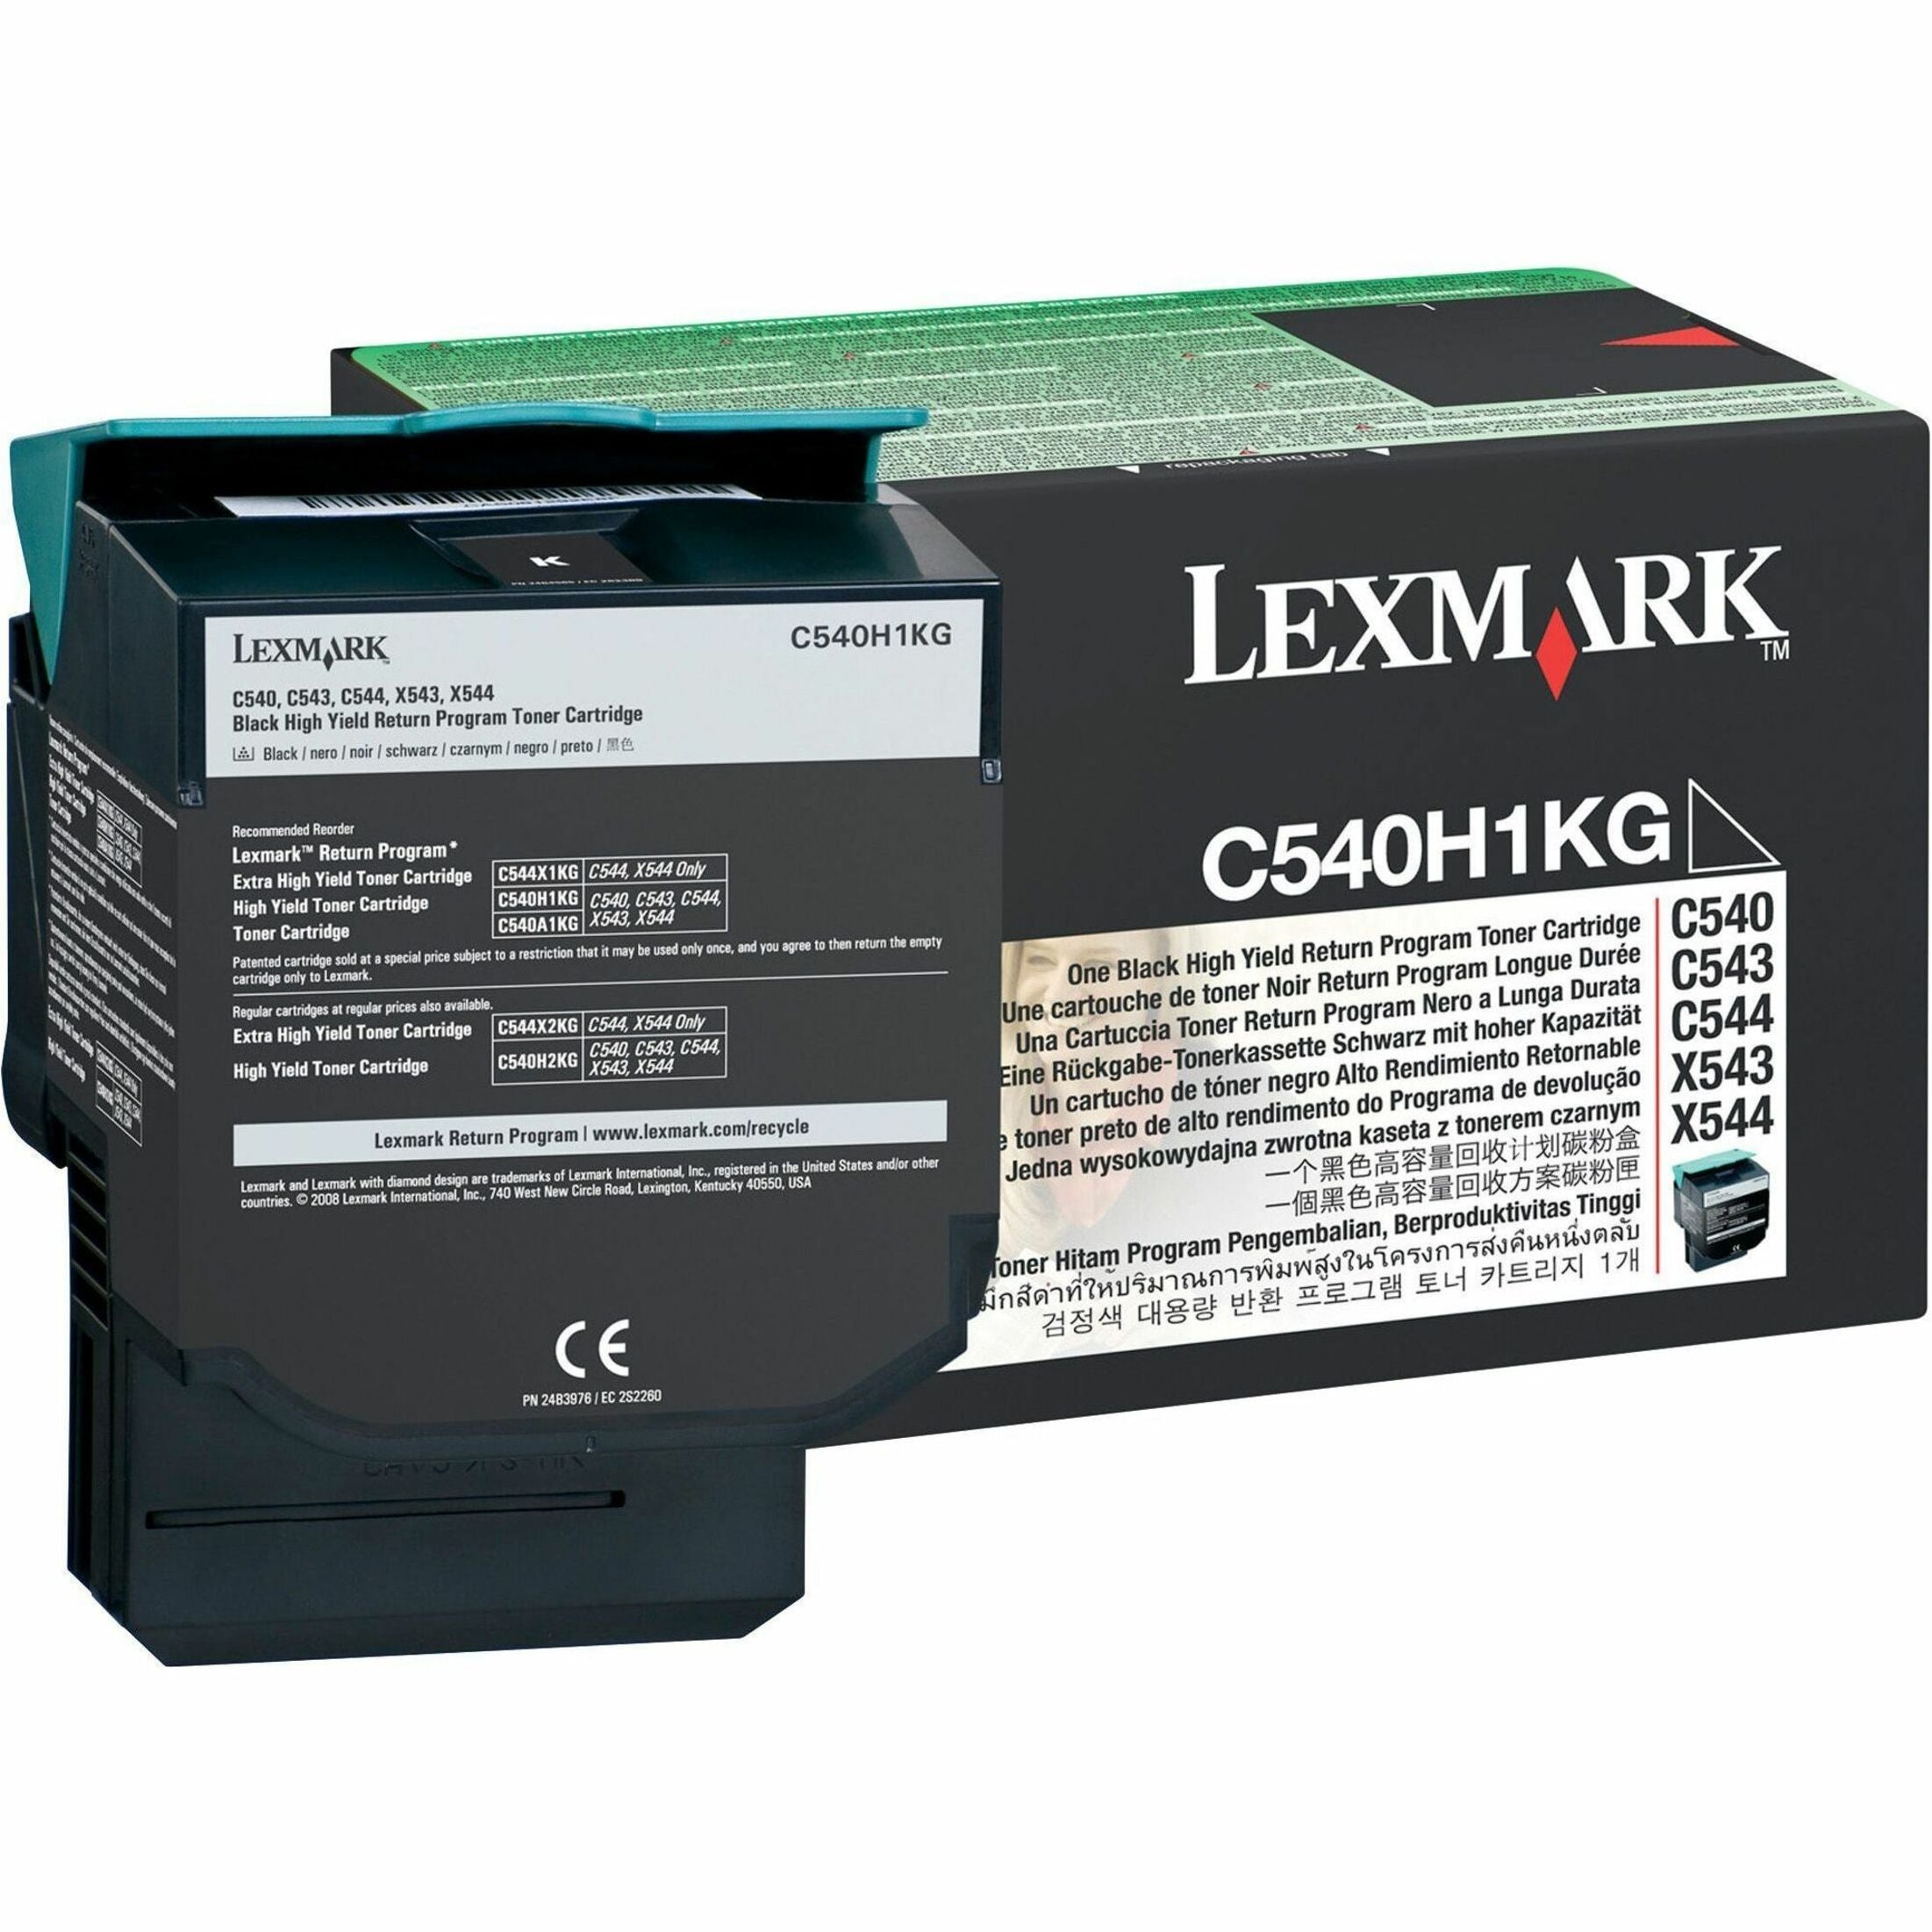 Lexmark C540H1KG Print Cartridge, 2500 Page Yield, Black